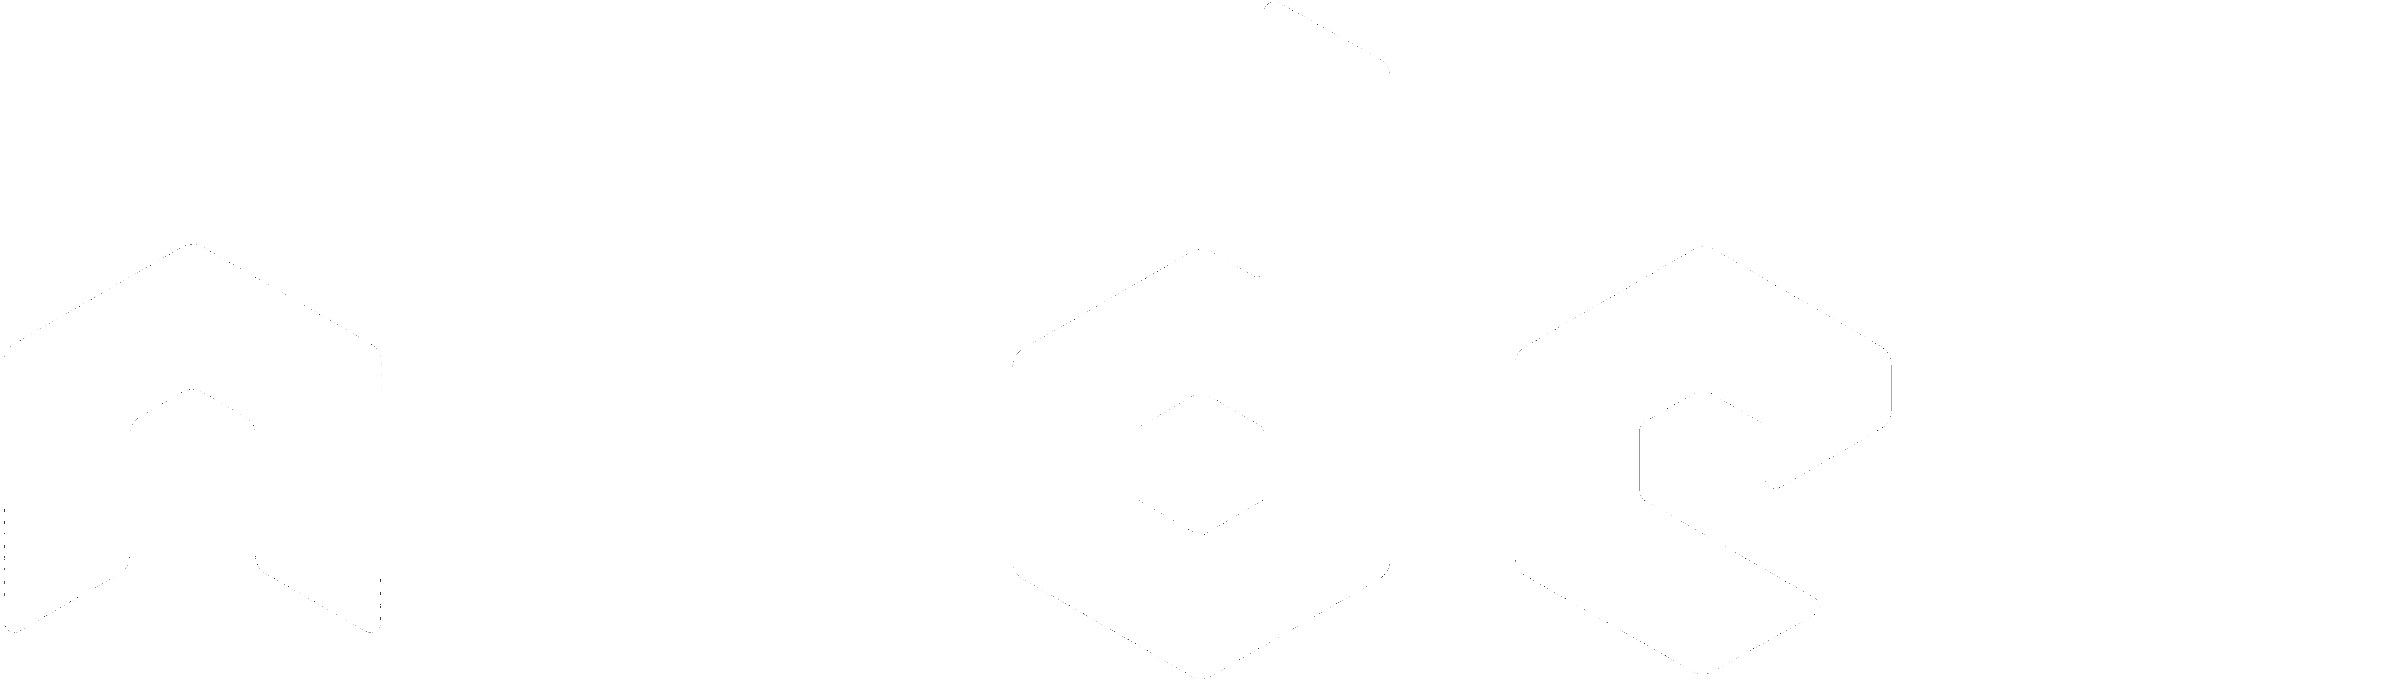 NodeJS logo in white